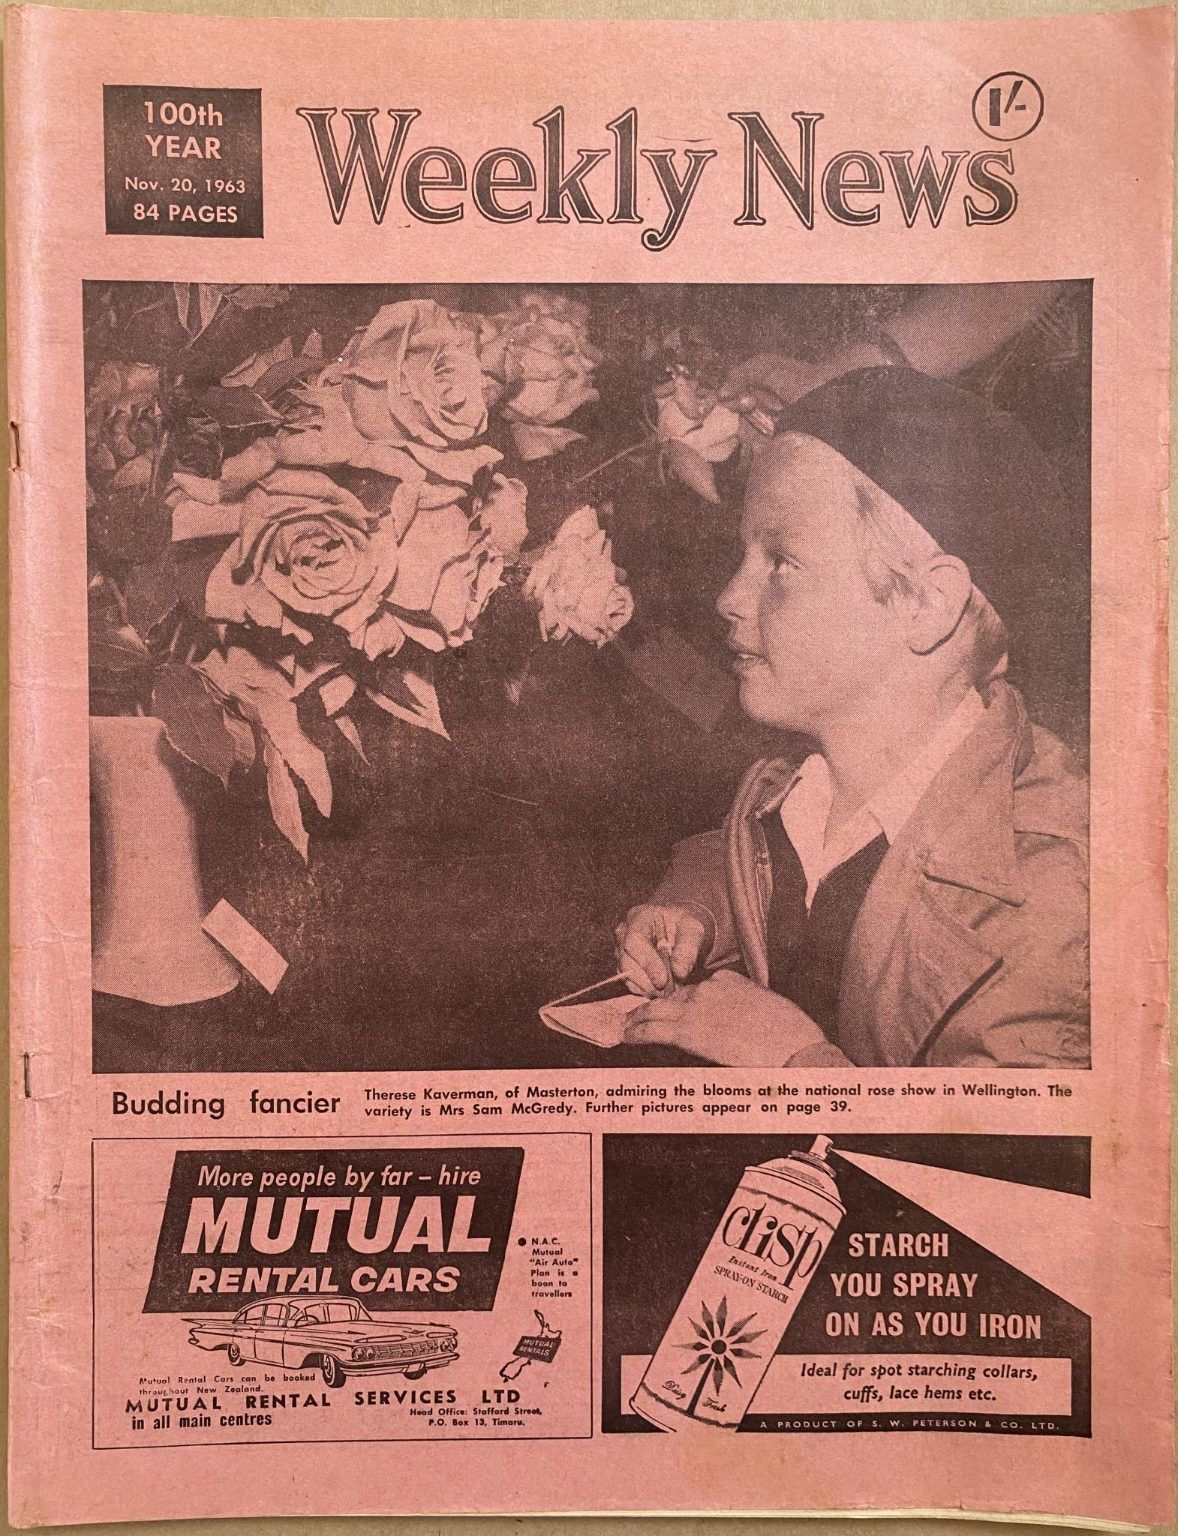 OLD NEWSPAPER: The Weekly News, No. 5217, 20 November 1963